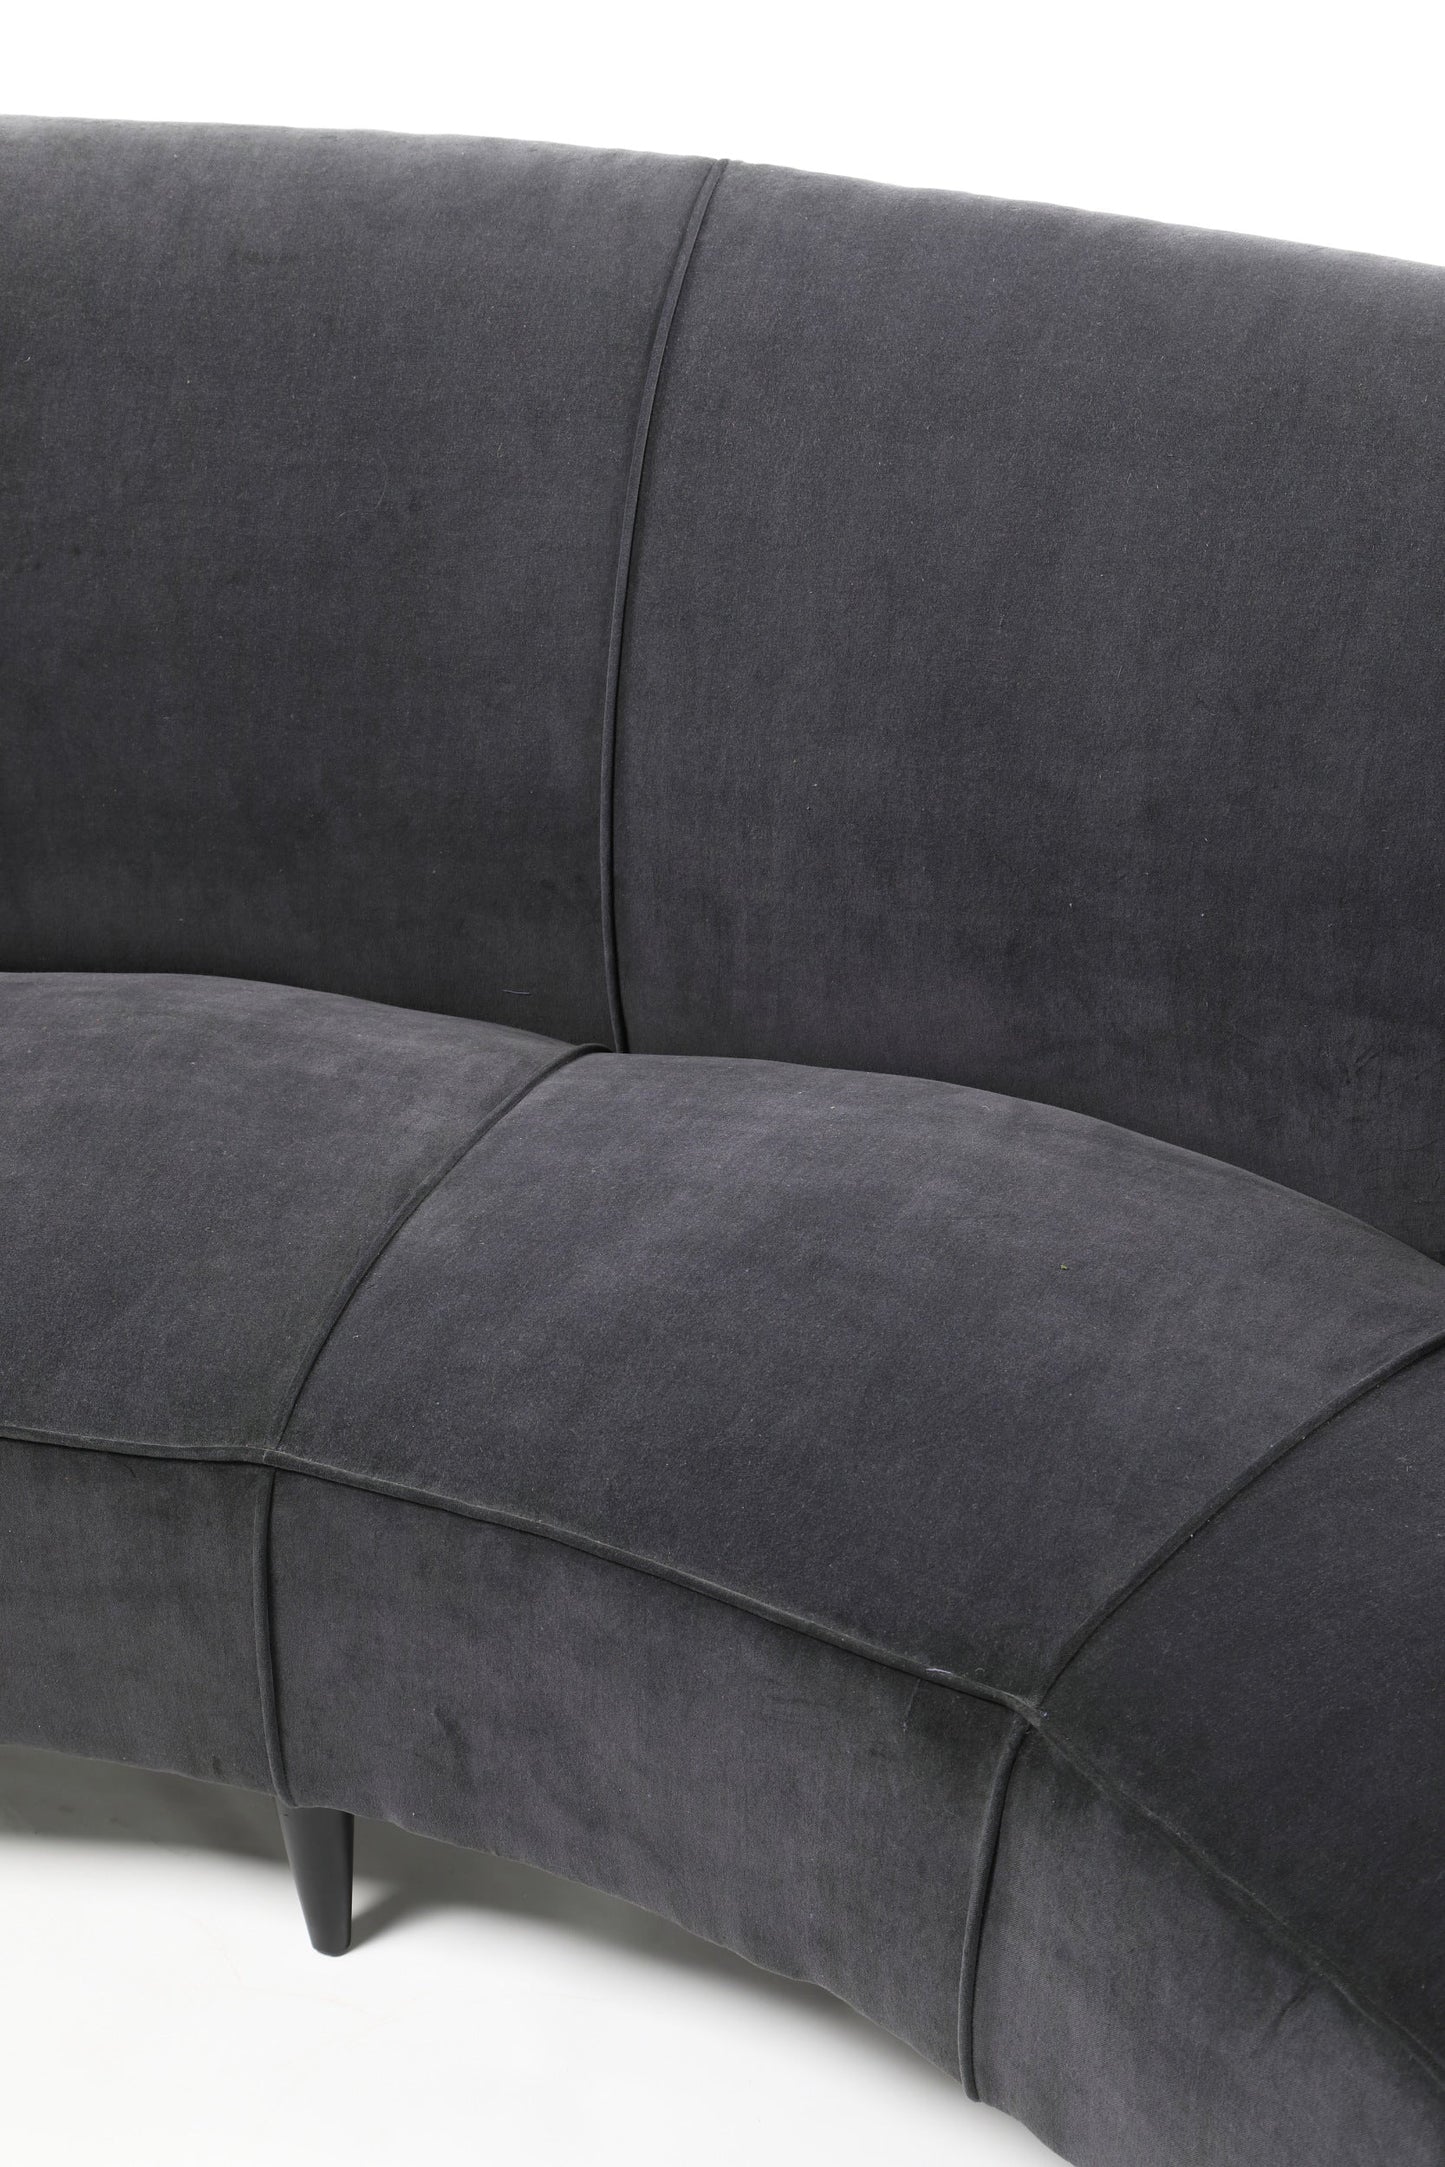 Curved sofa from the 50s in blueberry velvet